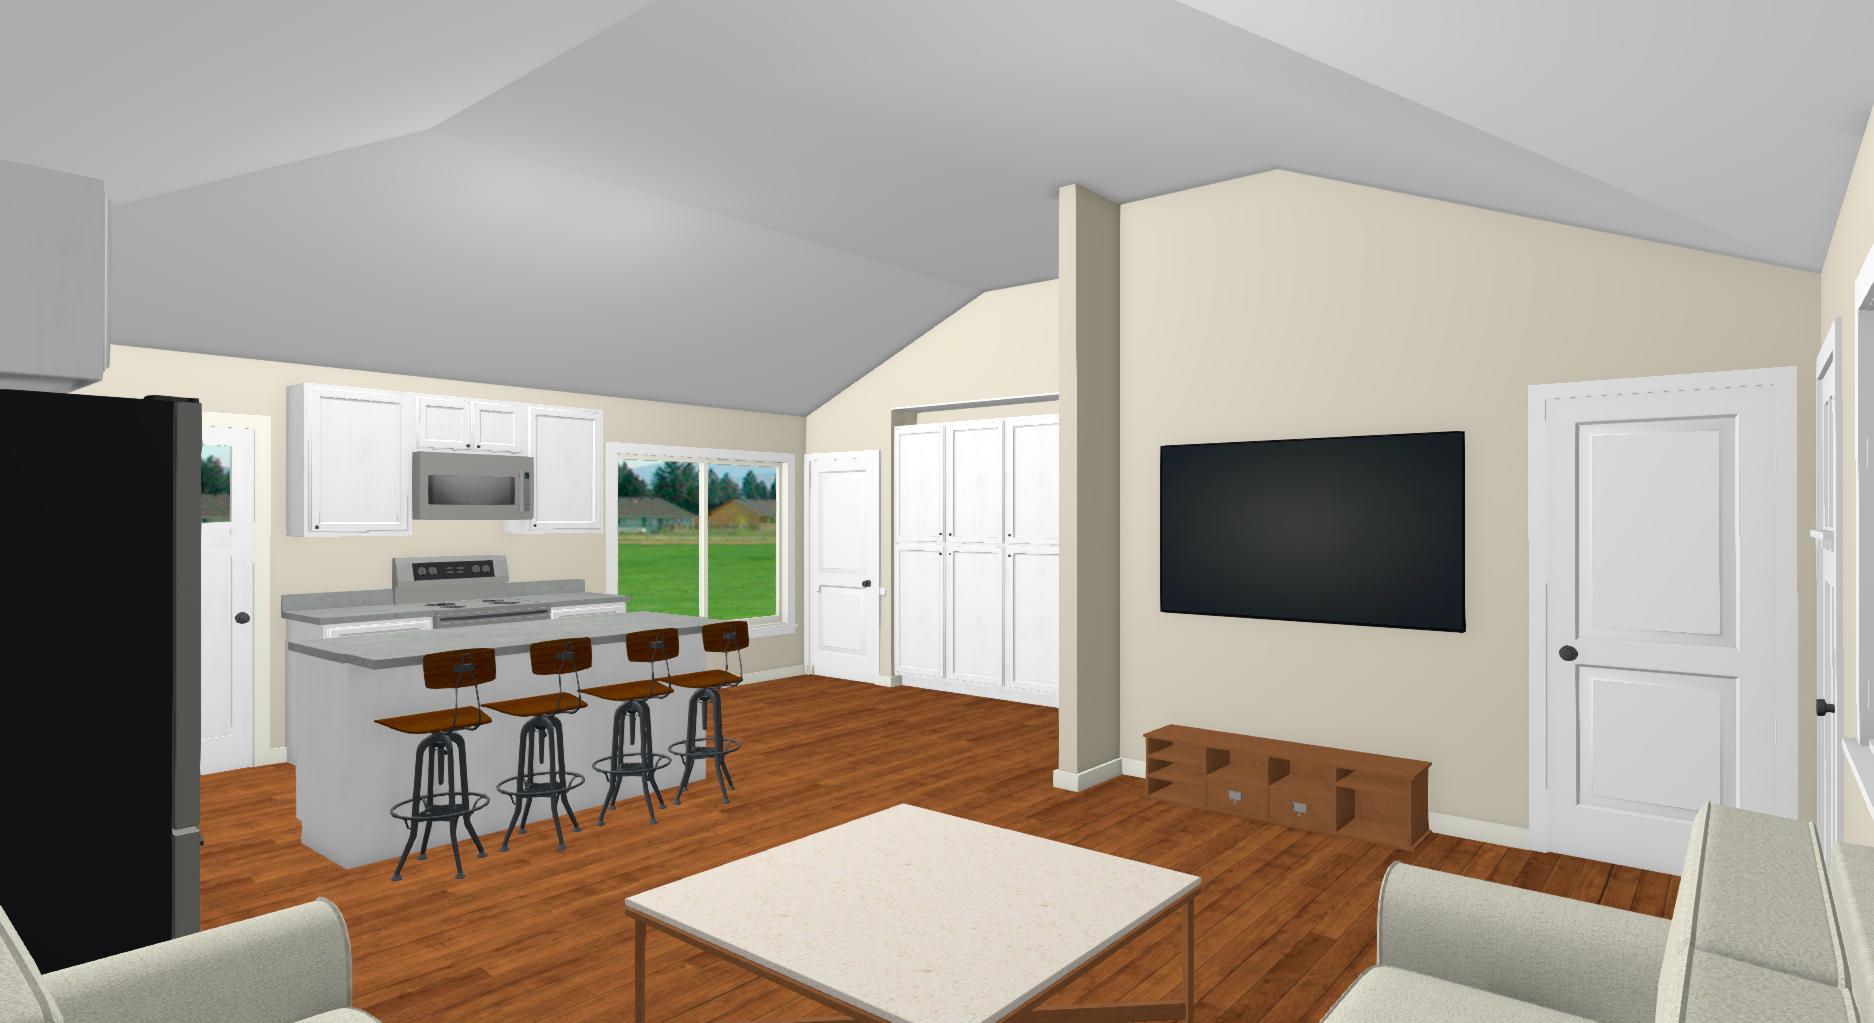 Home rendering from the University of Denver team.